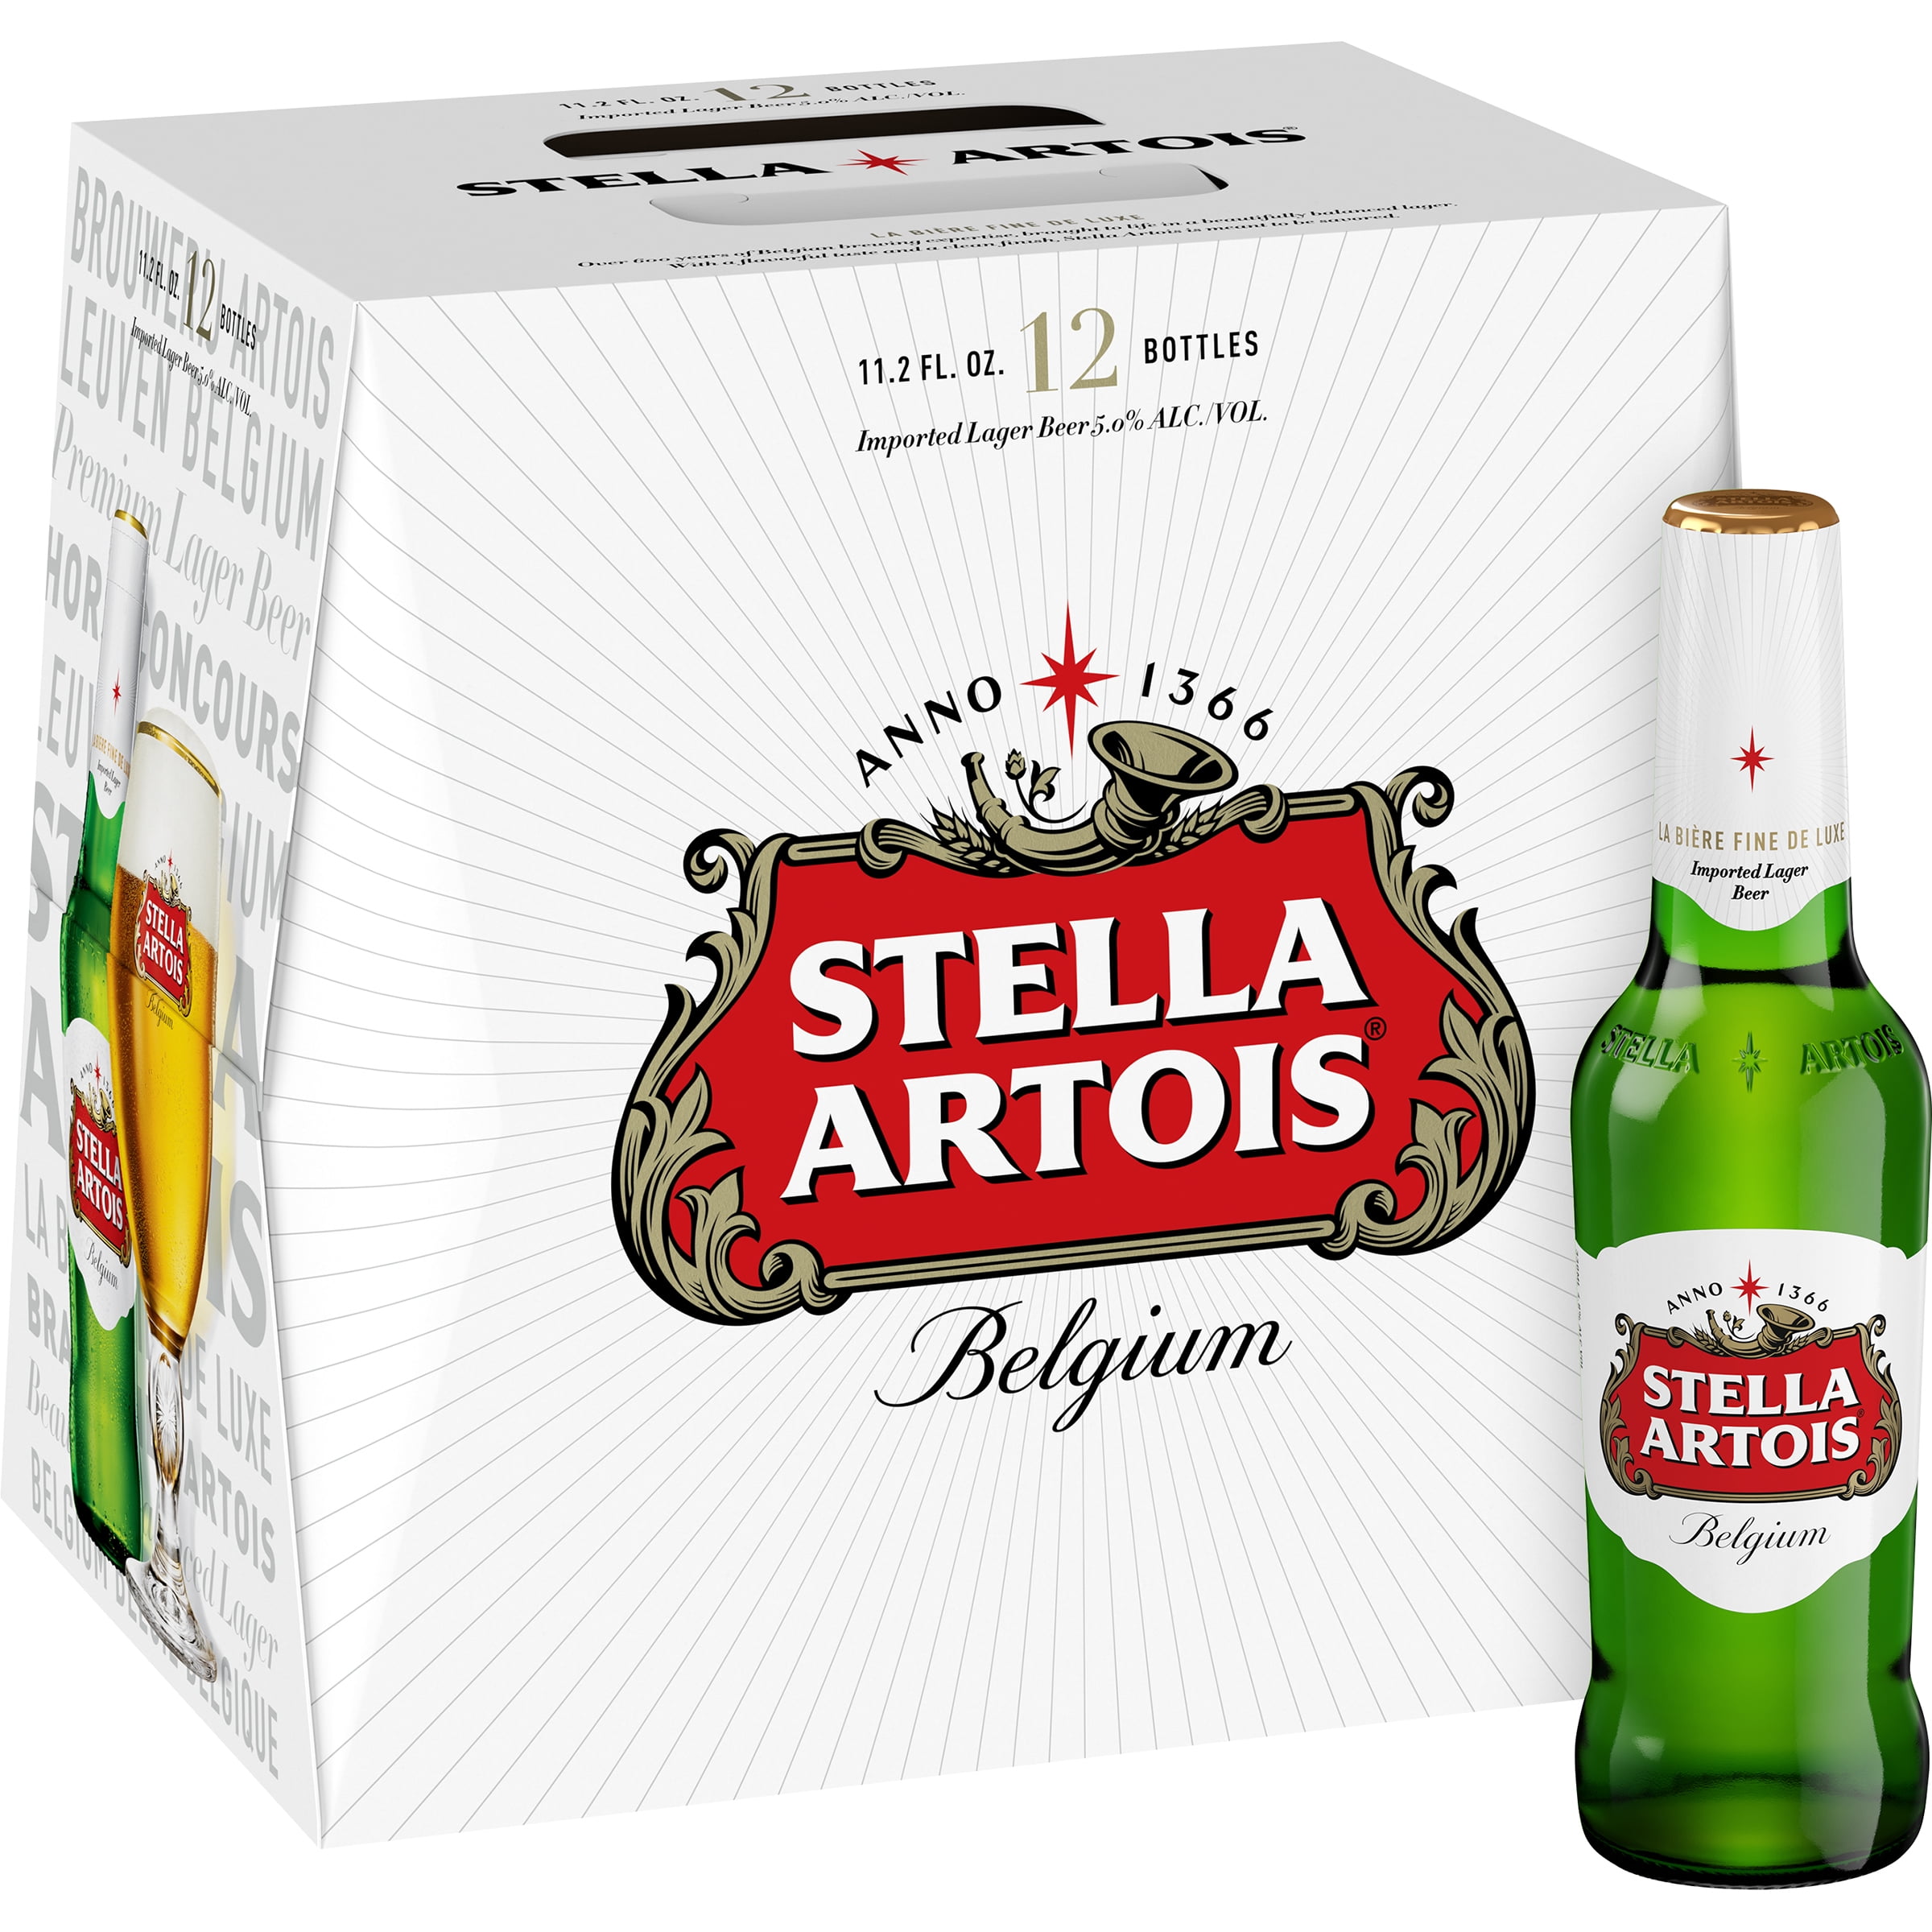 Stella Artois 6 Pack Price : Stella Artois Bottle Holiday Offerings ...